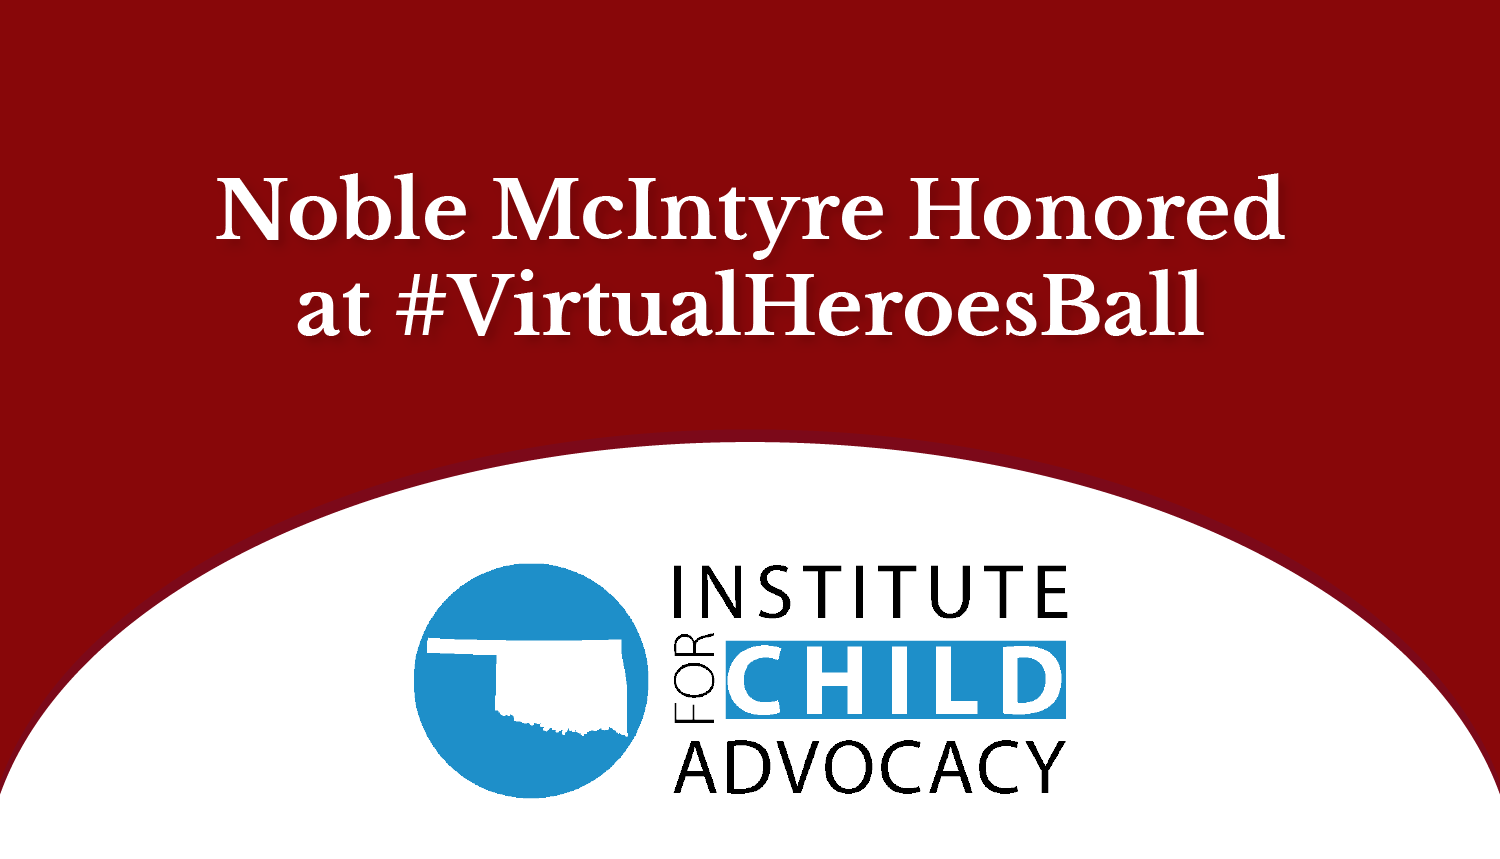 Noble McIntyre honored at #VirtualHeroesBall 2020